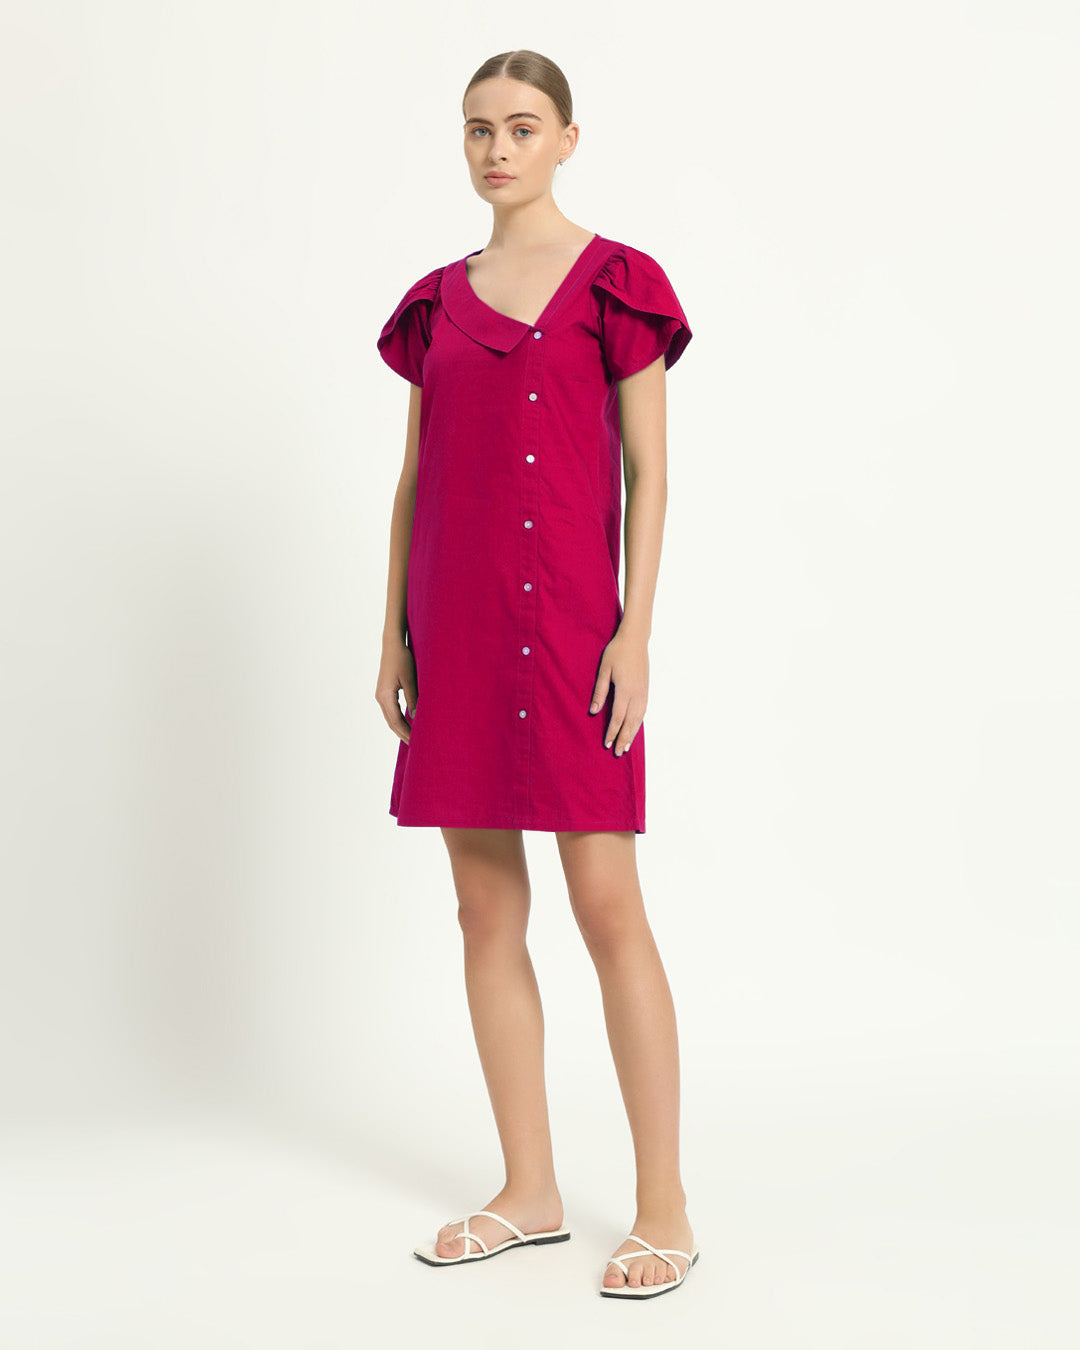 The Krensdorf Berry Cotton Dress